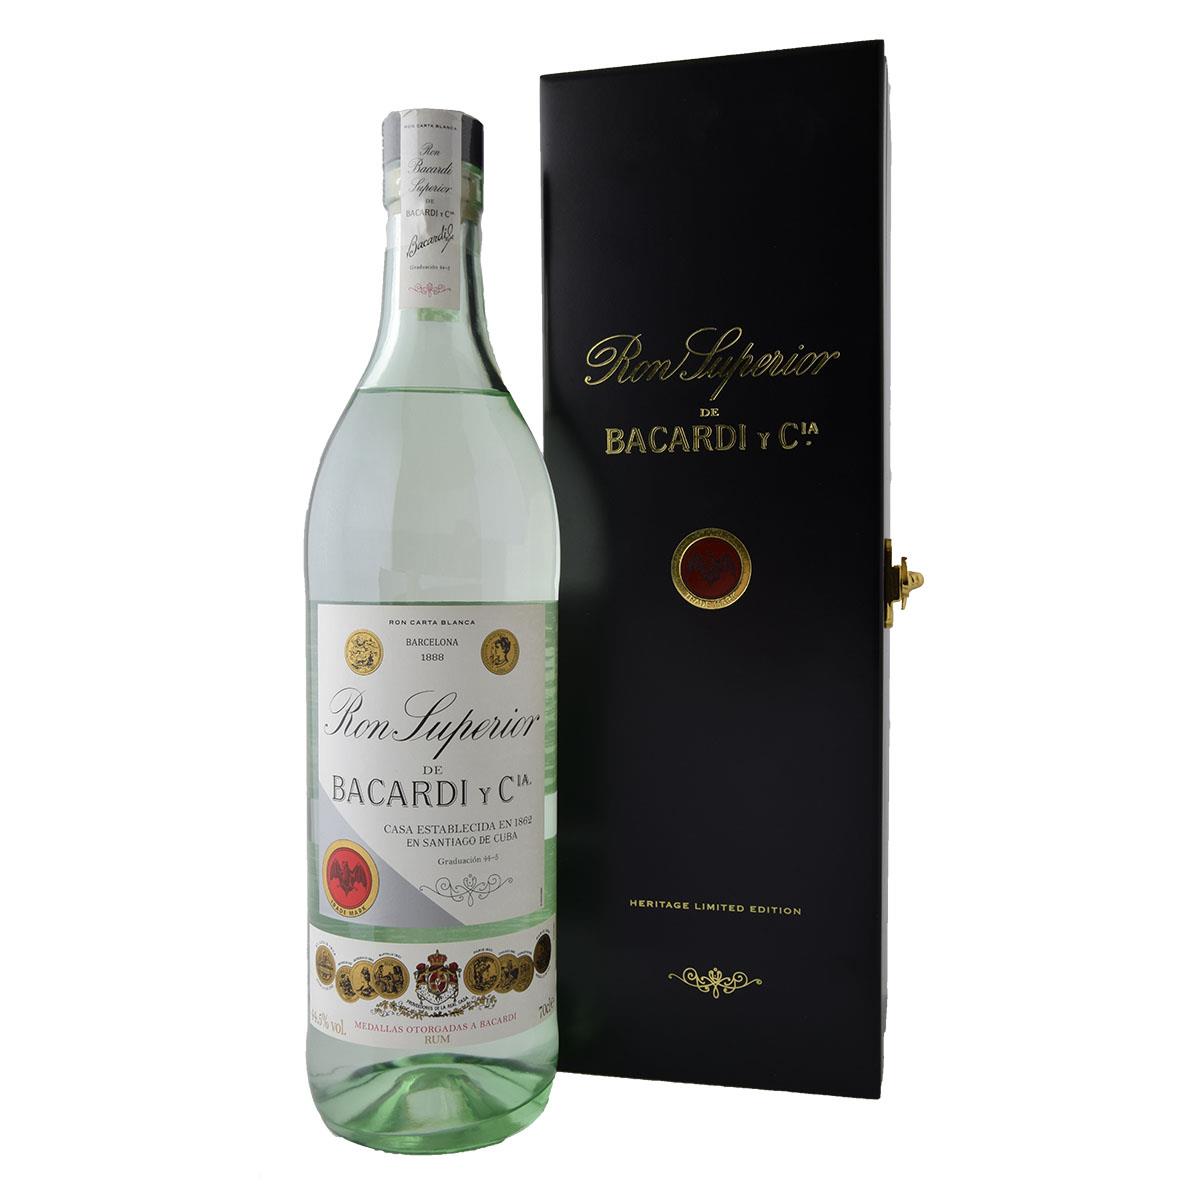 Bacardi Heritage Limited Edition Rum 700ml